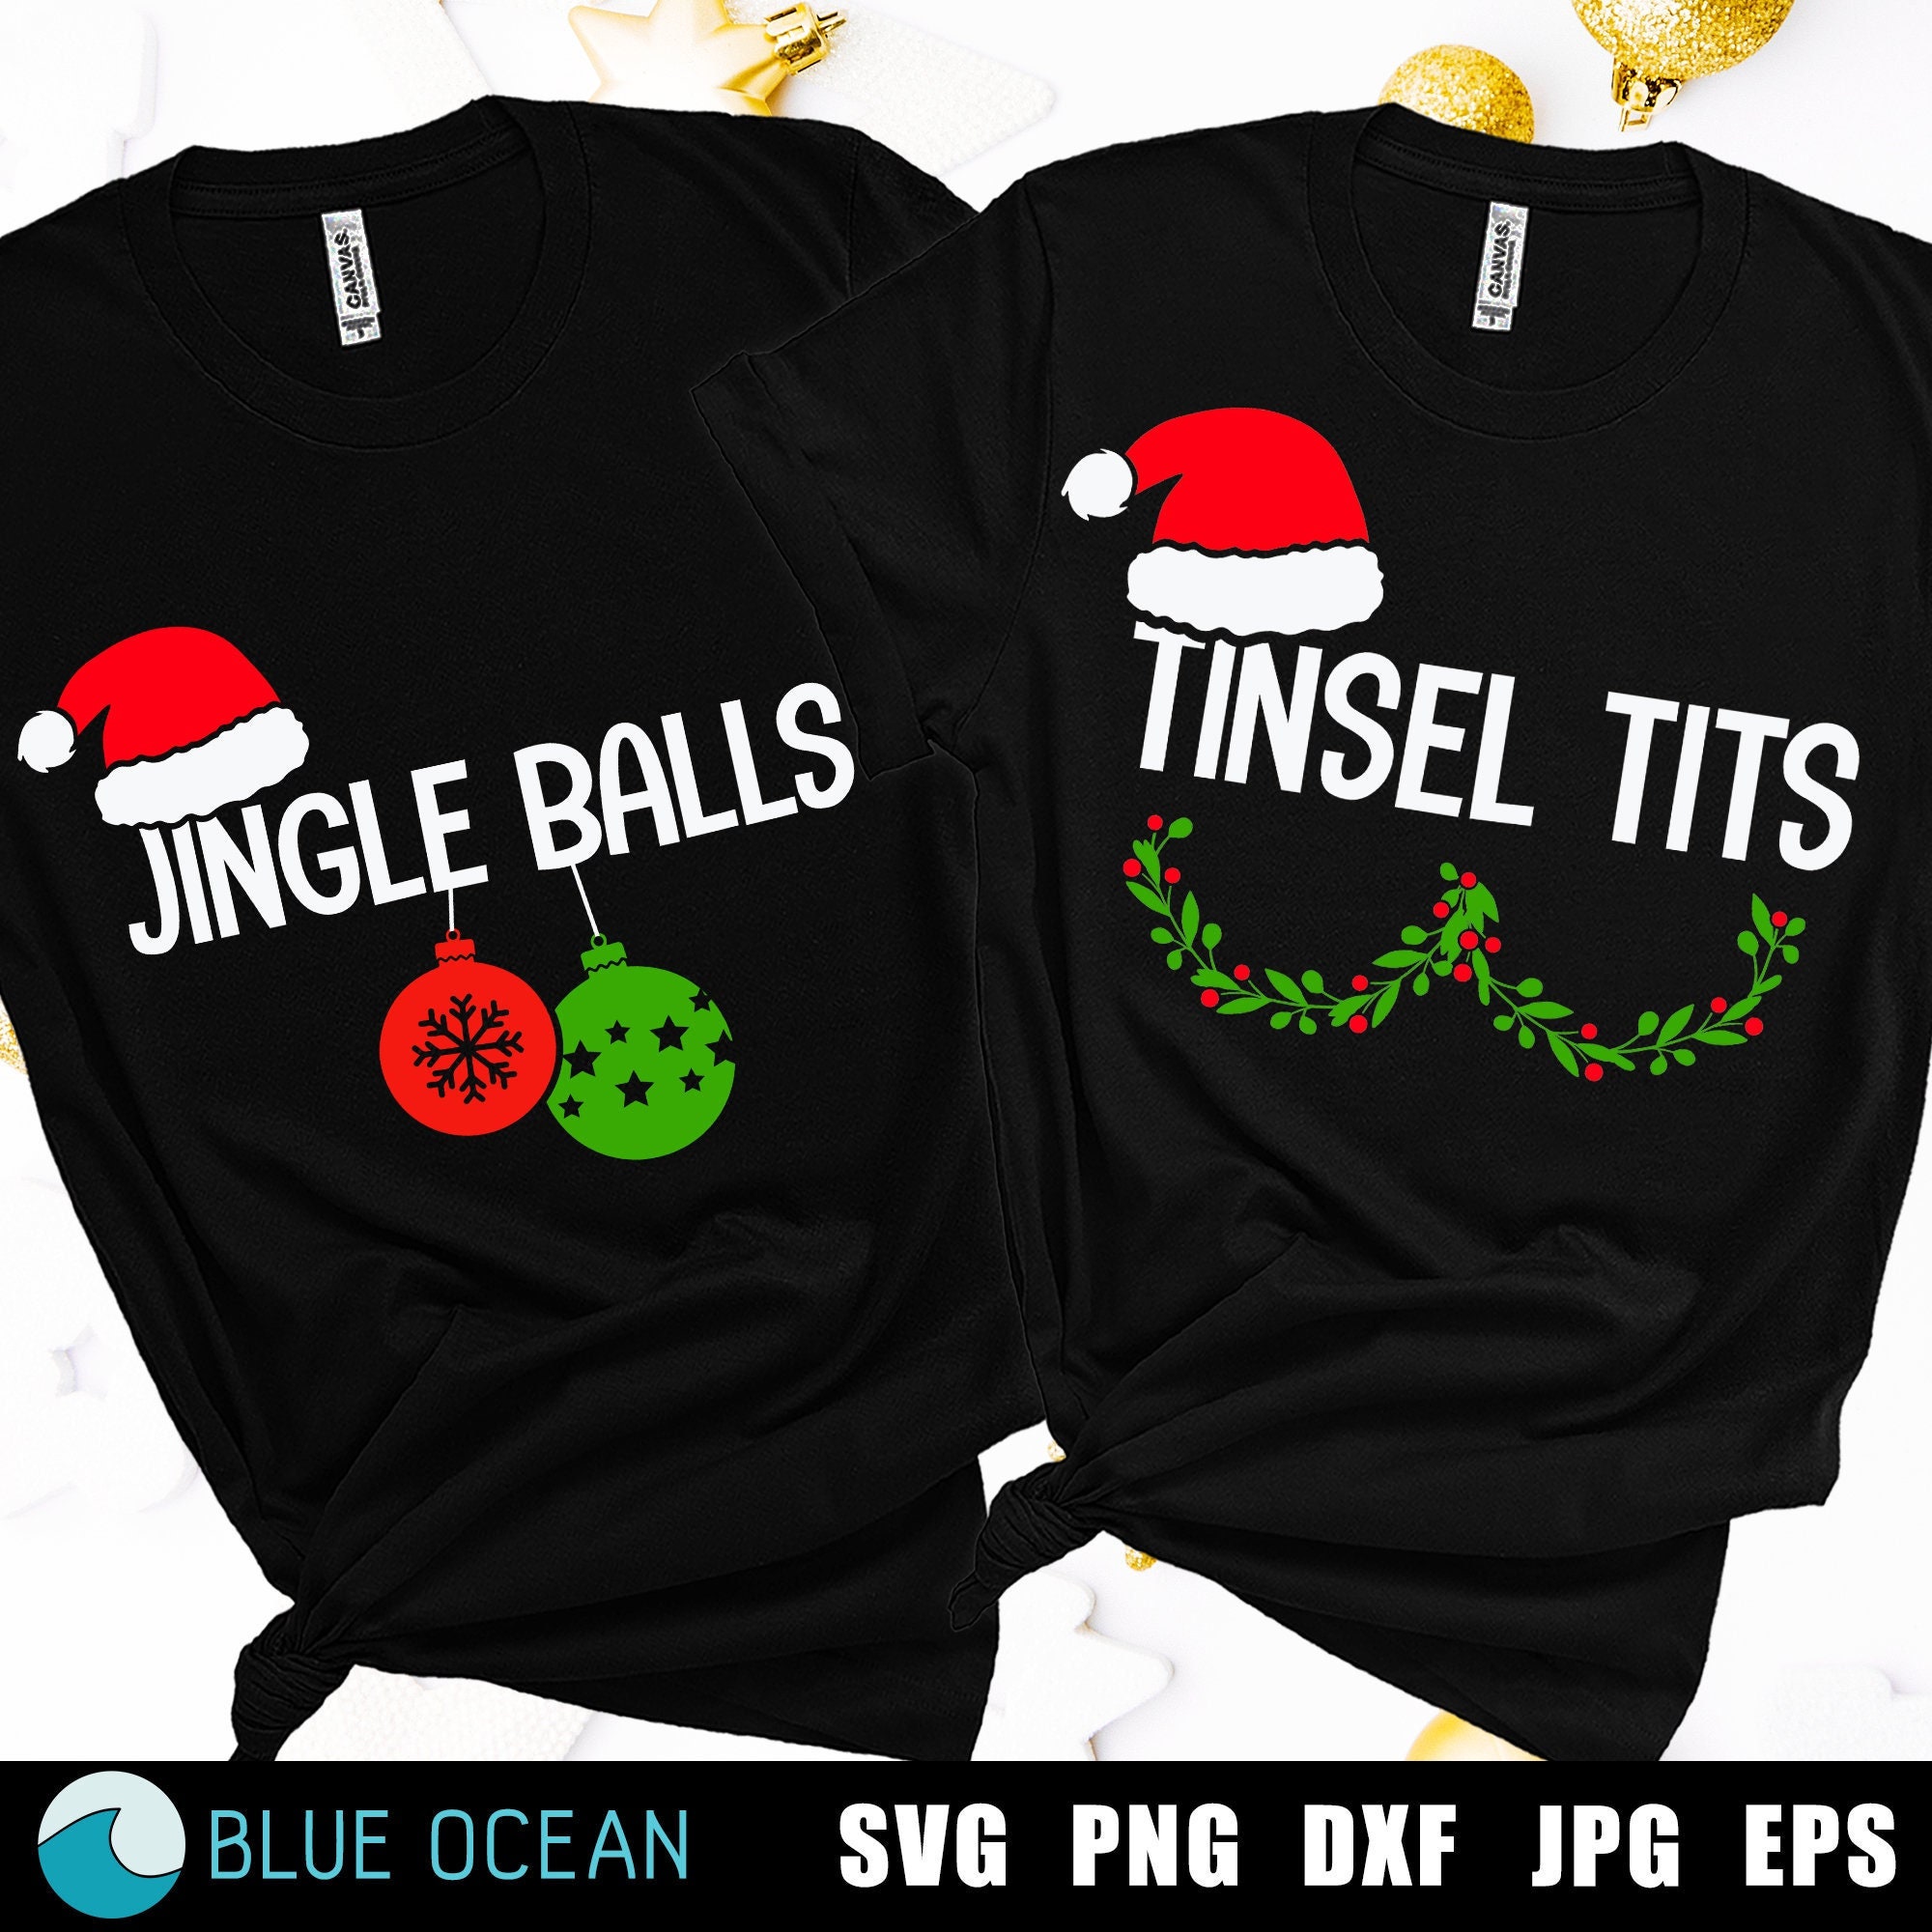 Discover Jingle Balls Tinsel Tits Shirt, Funny Christmas Shirt, Couple Christmas Shirt